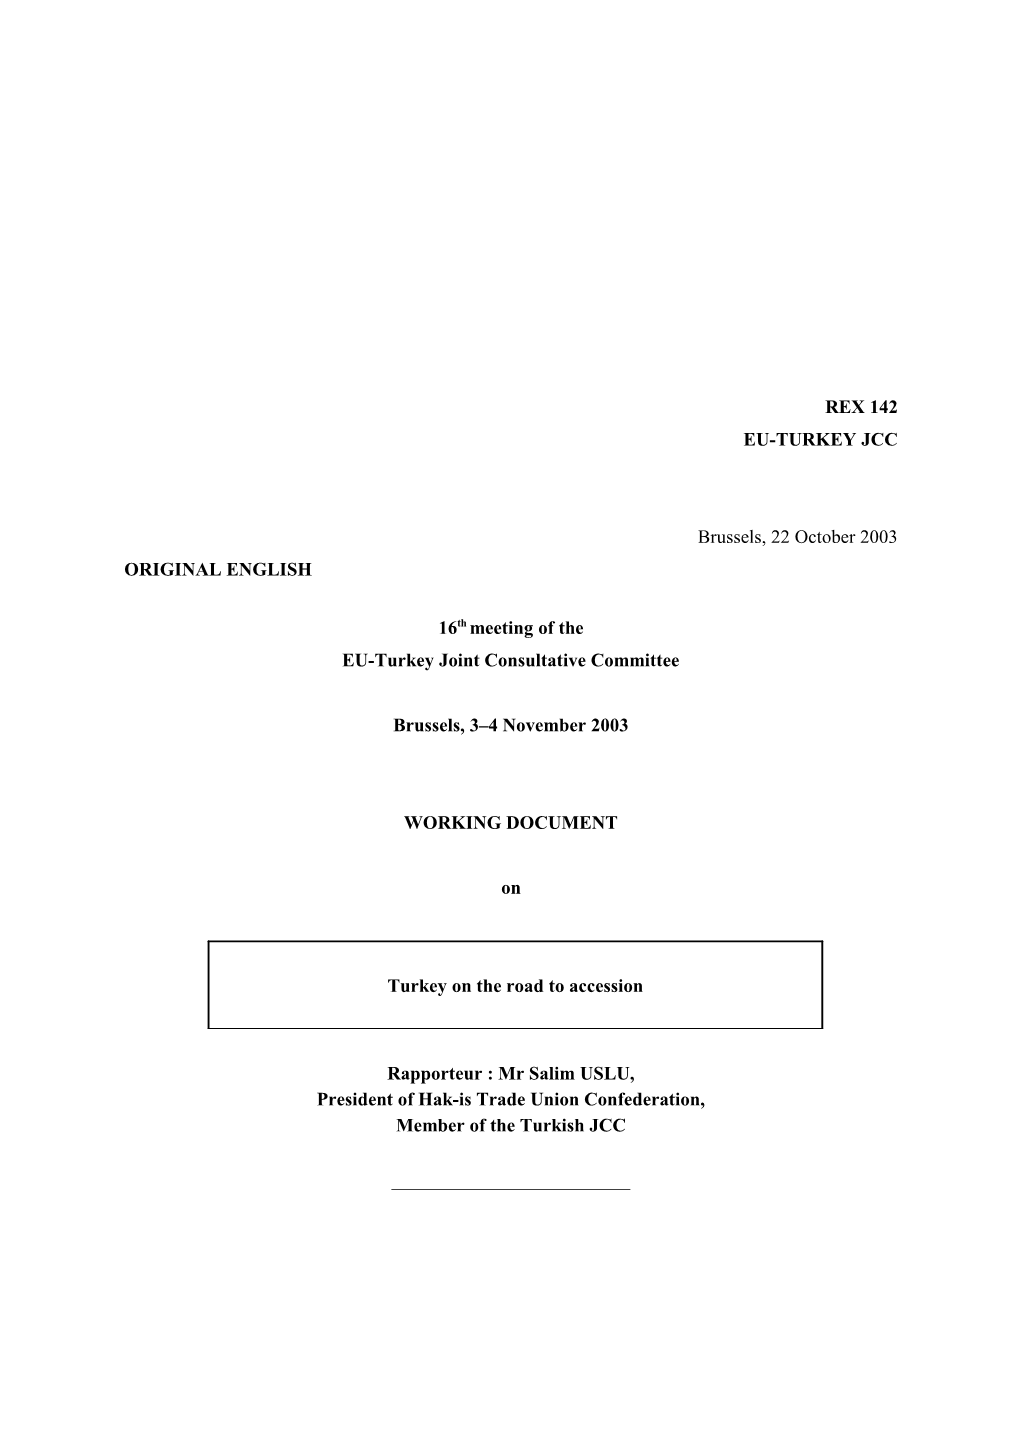 Official Internal Document Di Ces105-2003 Di En